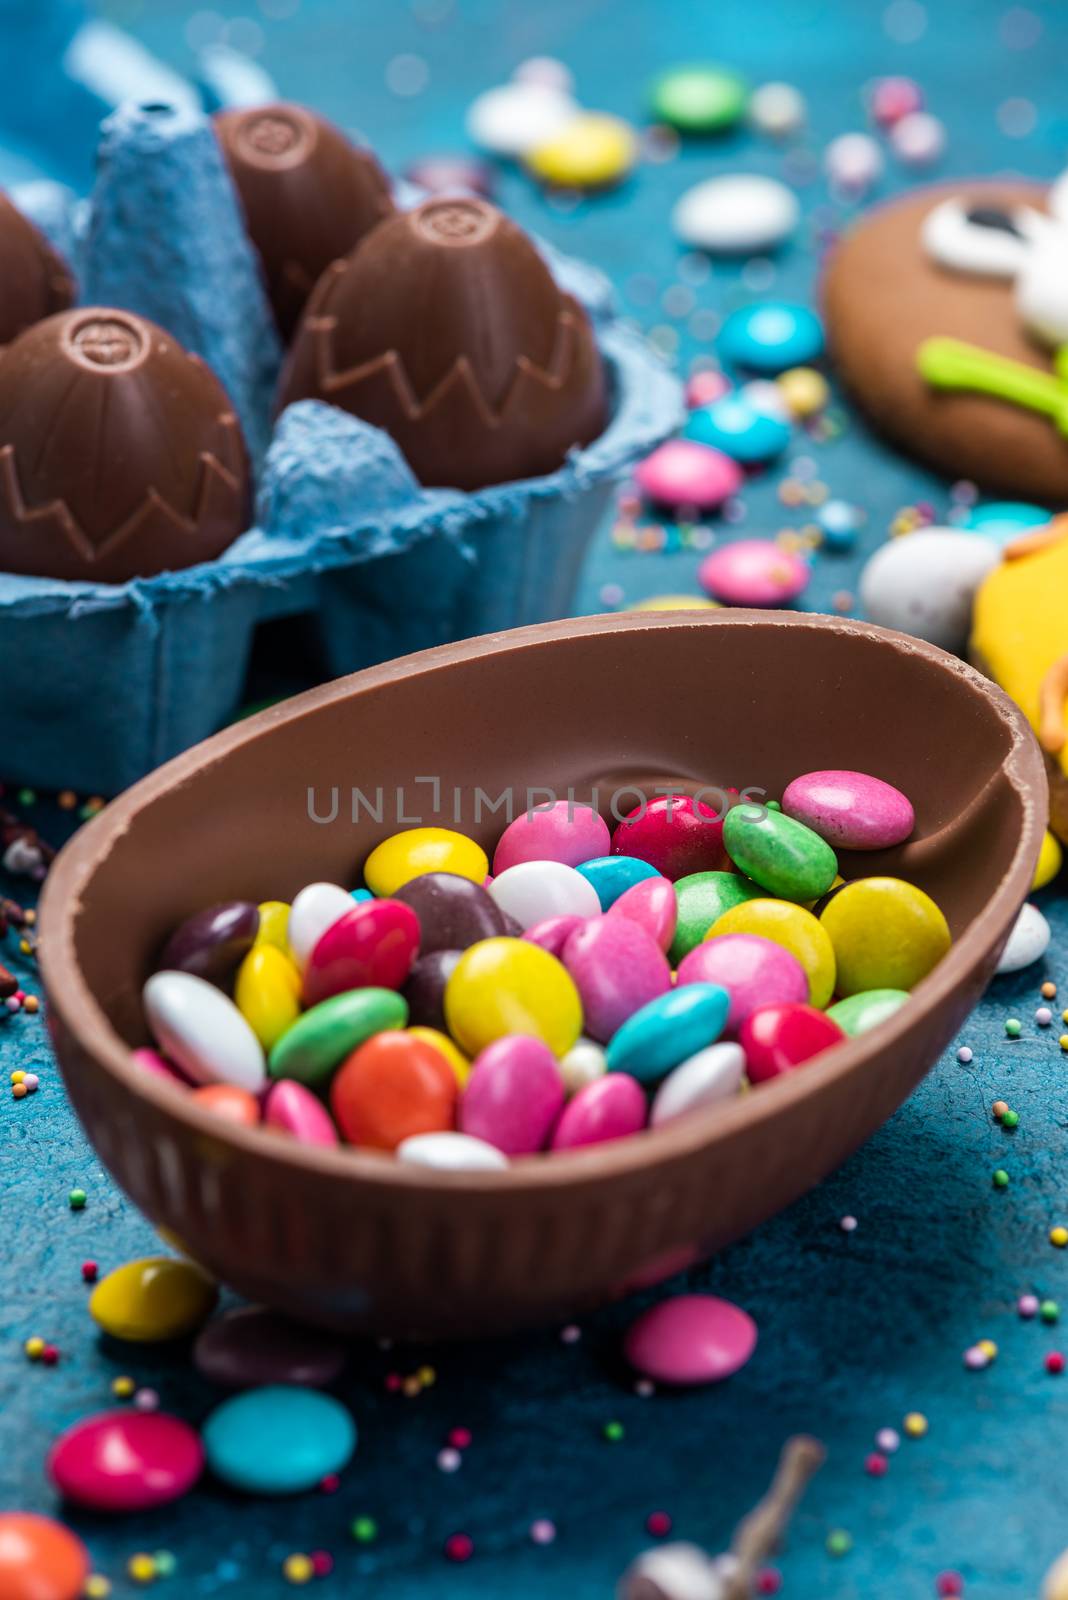 Colorful Easter Egg. Festive Sweet Treat. Spring Holiday Season.